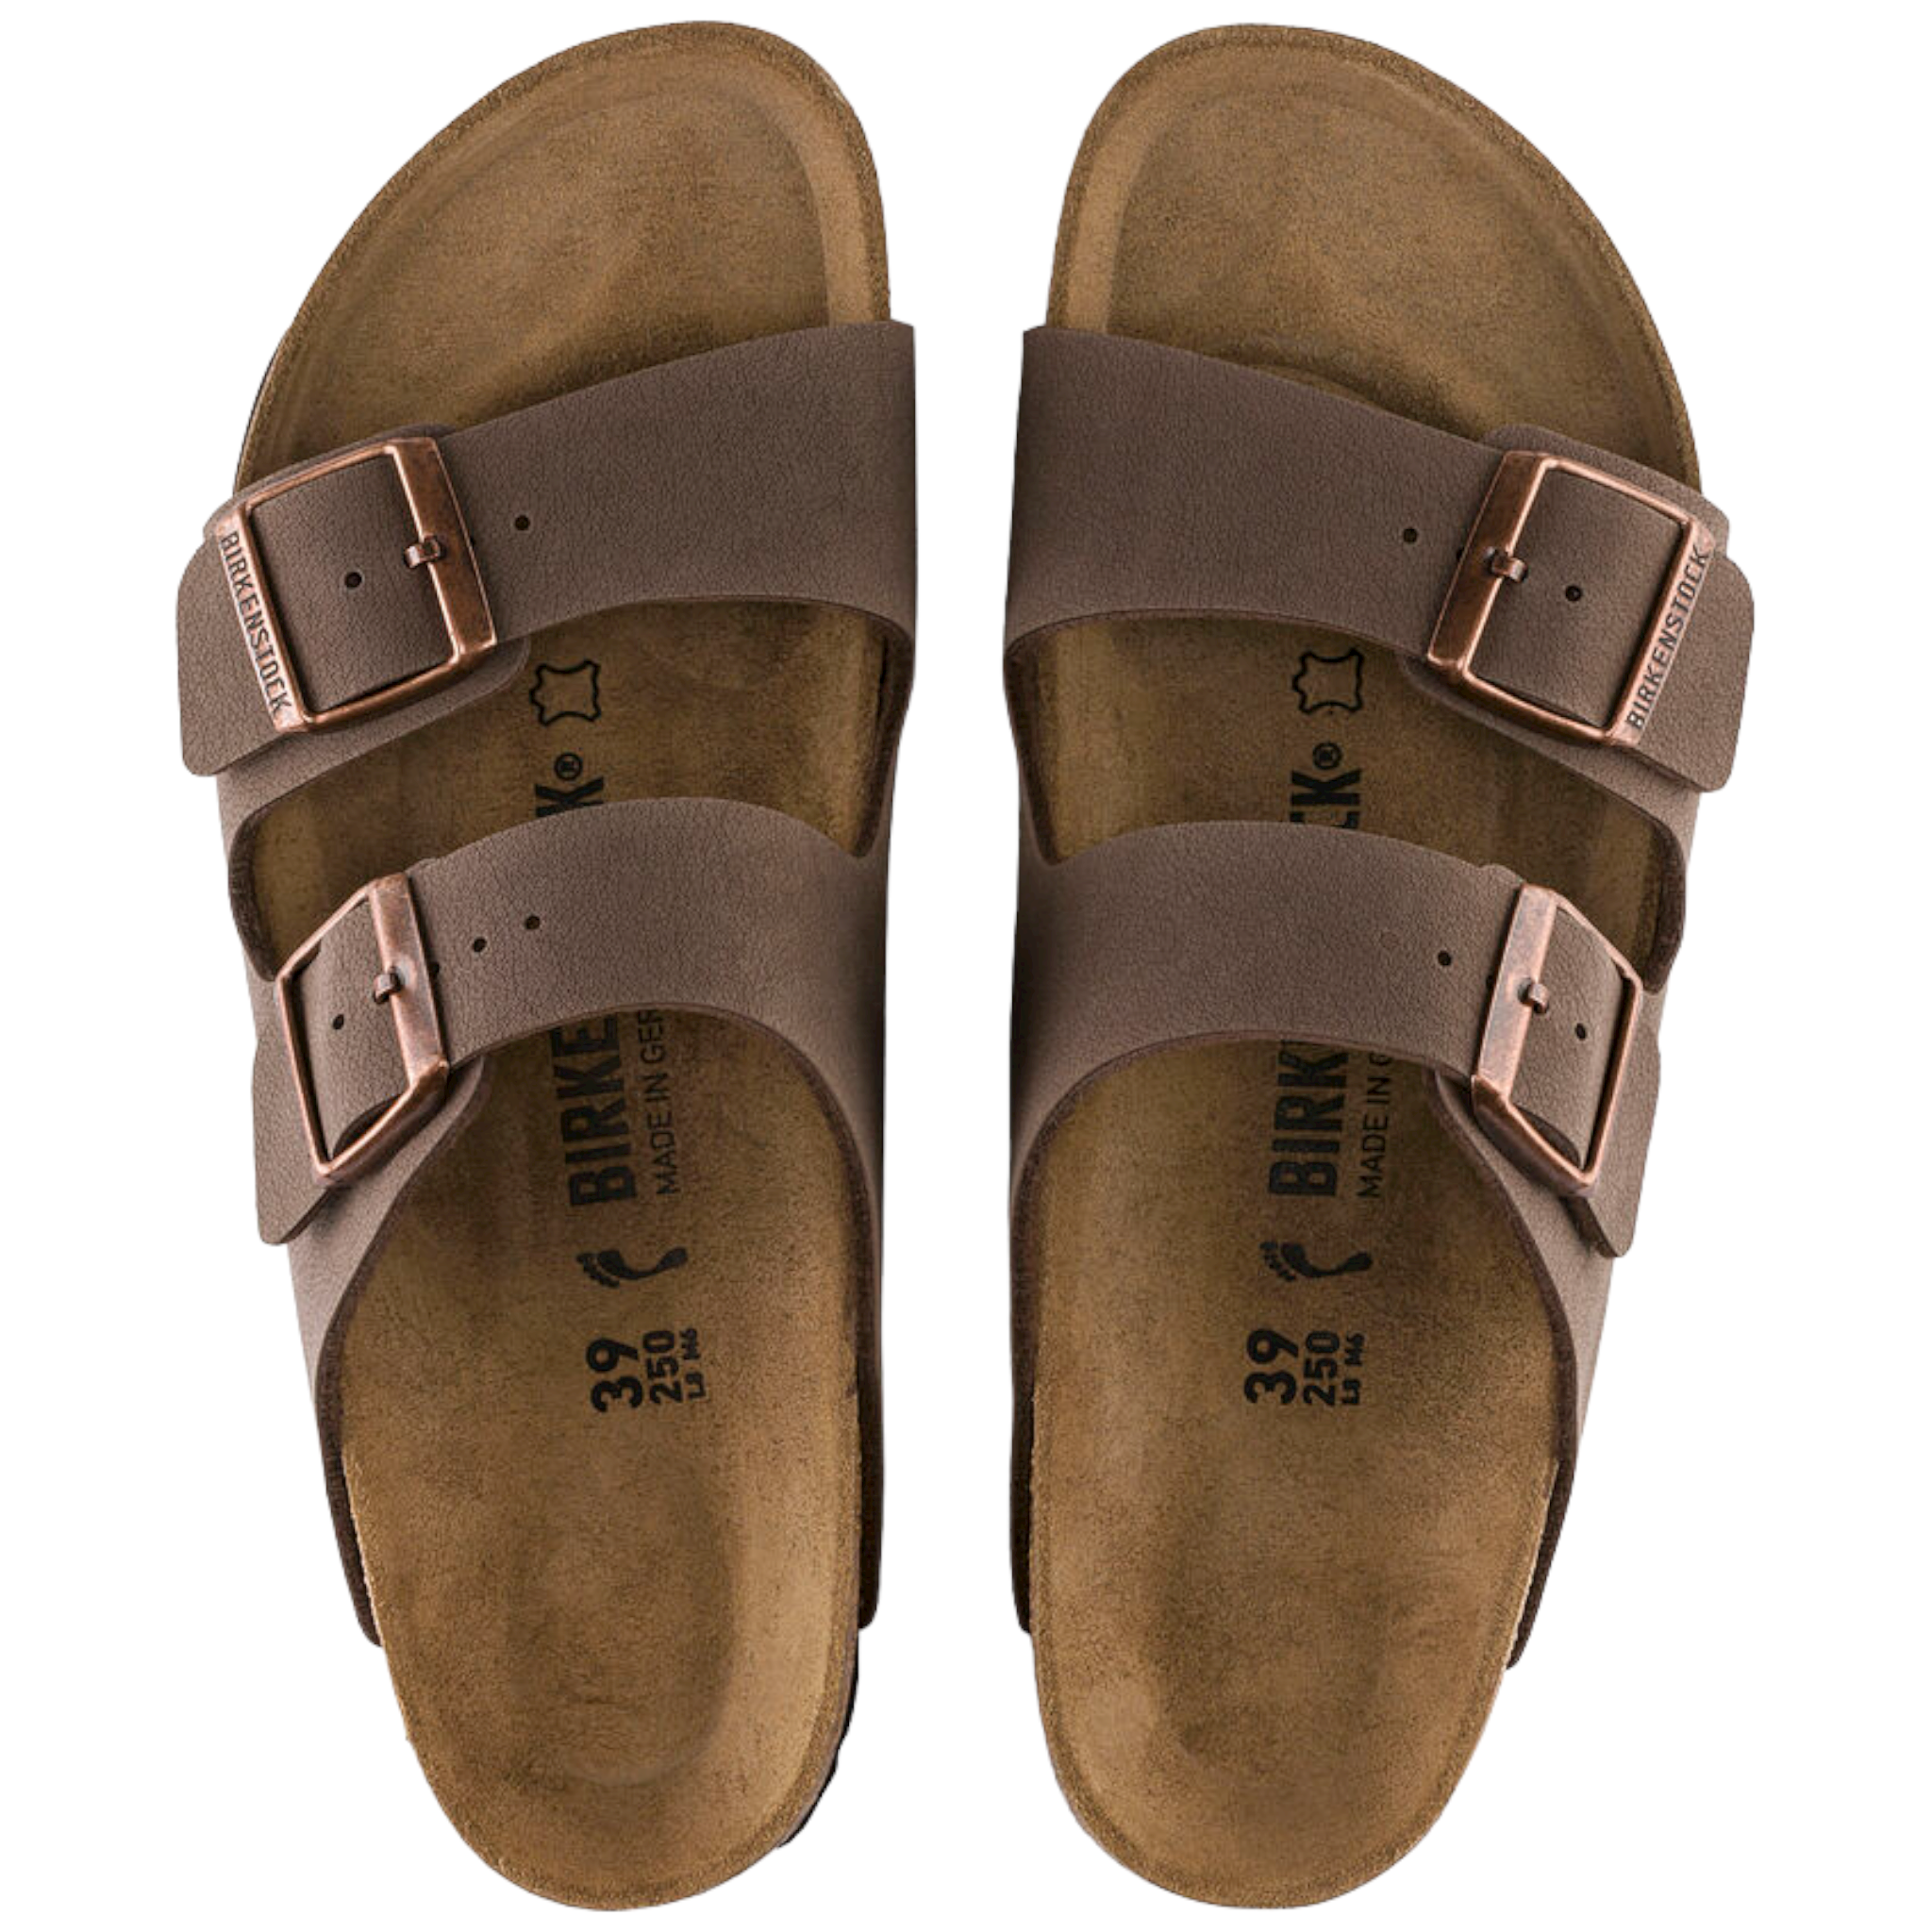 Arizona Birkibuc - shoe&amp;me - Birkenstock - Slide - Sandal, Slides/Scuffs, Unisex